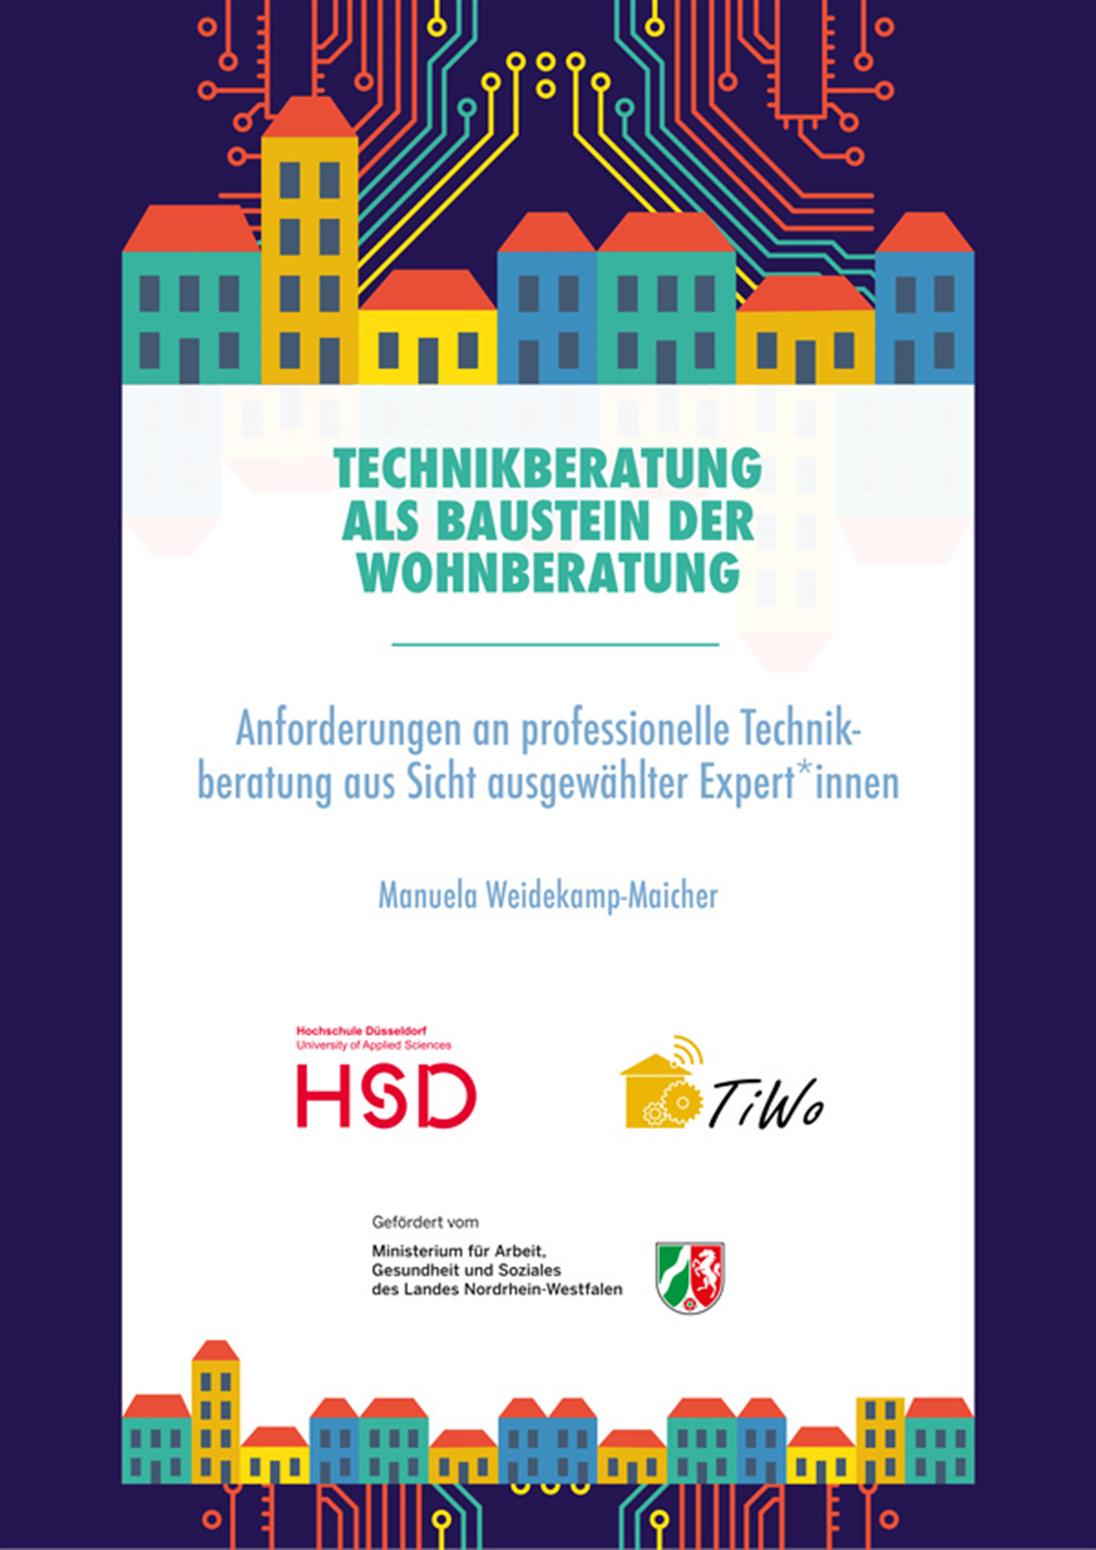 Cover "Anforderungen an professionelle Technikberatung
aus Sicht ausgewählter Expert*innen"
from Manuela Weidekamp-Maicher